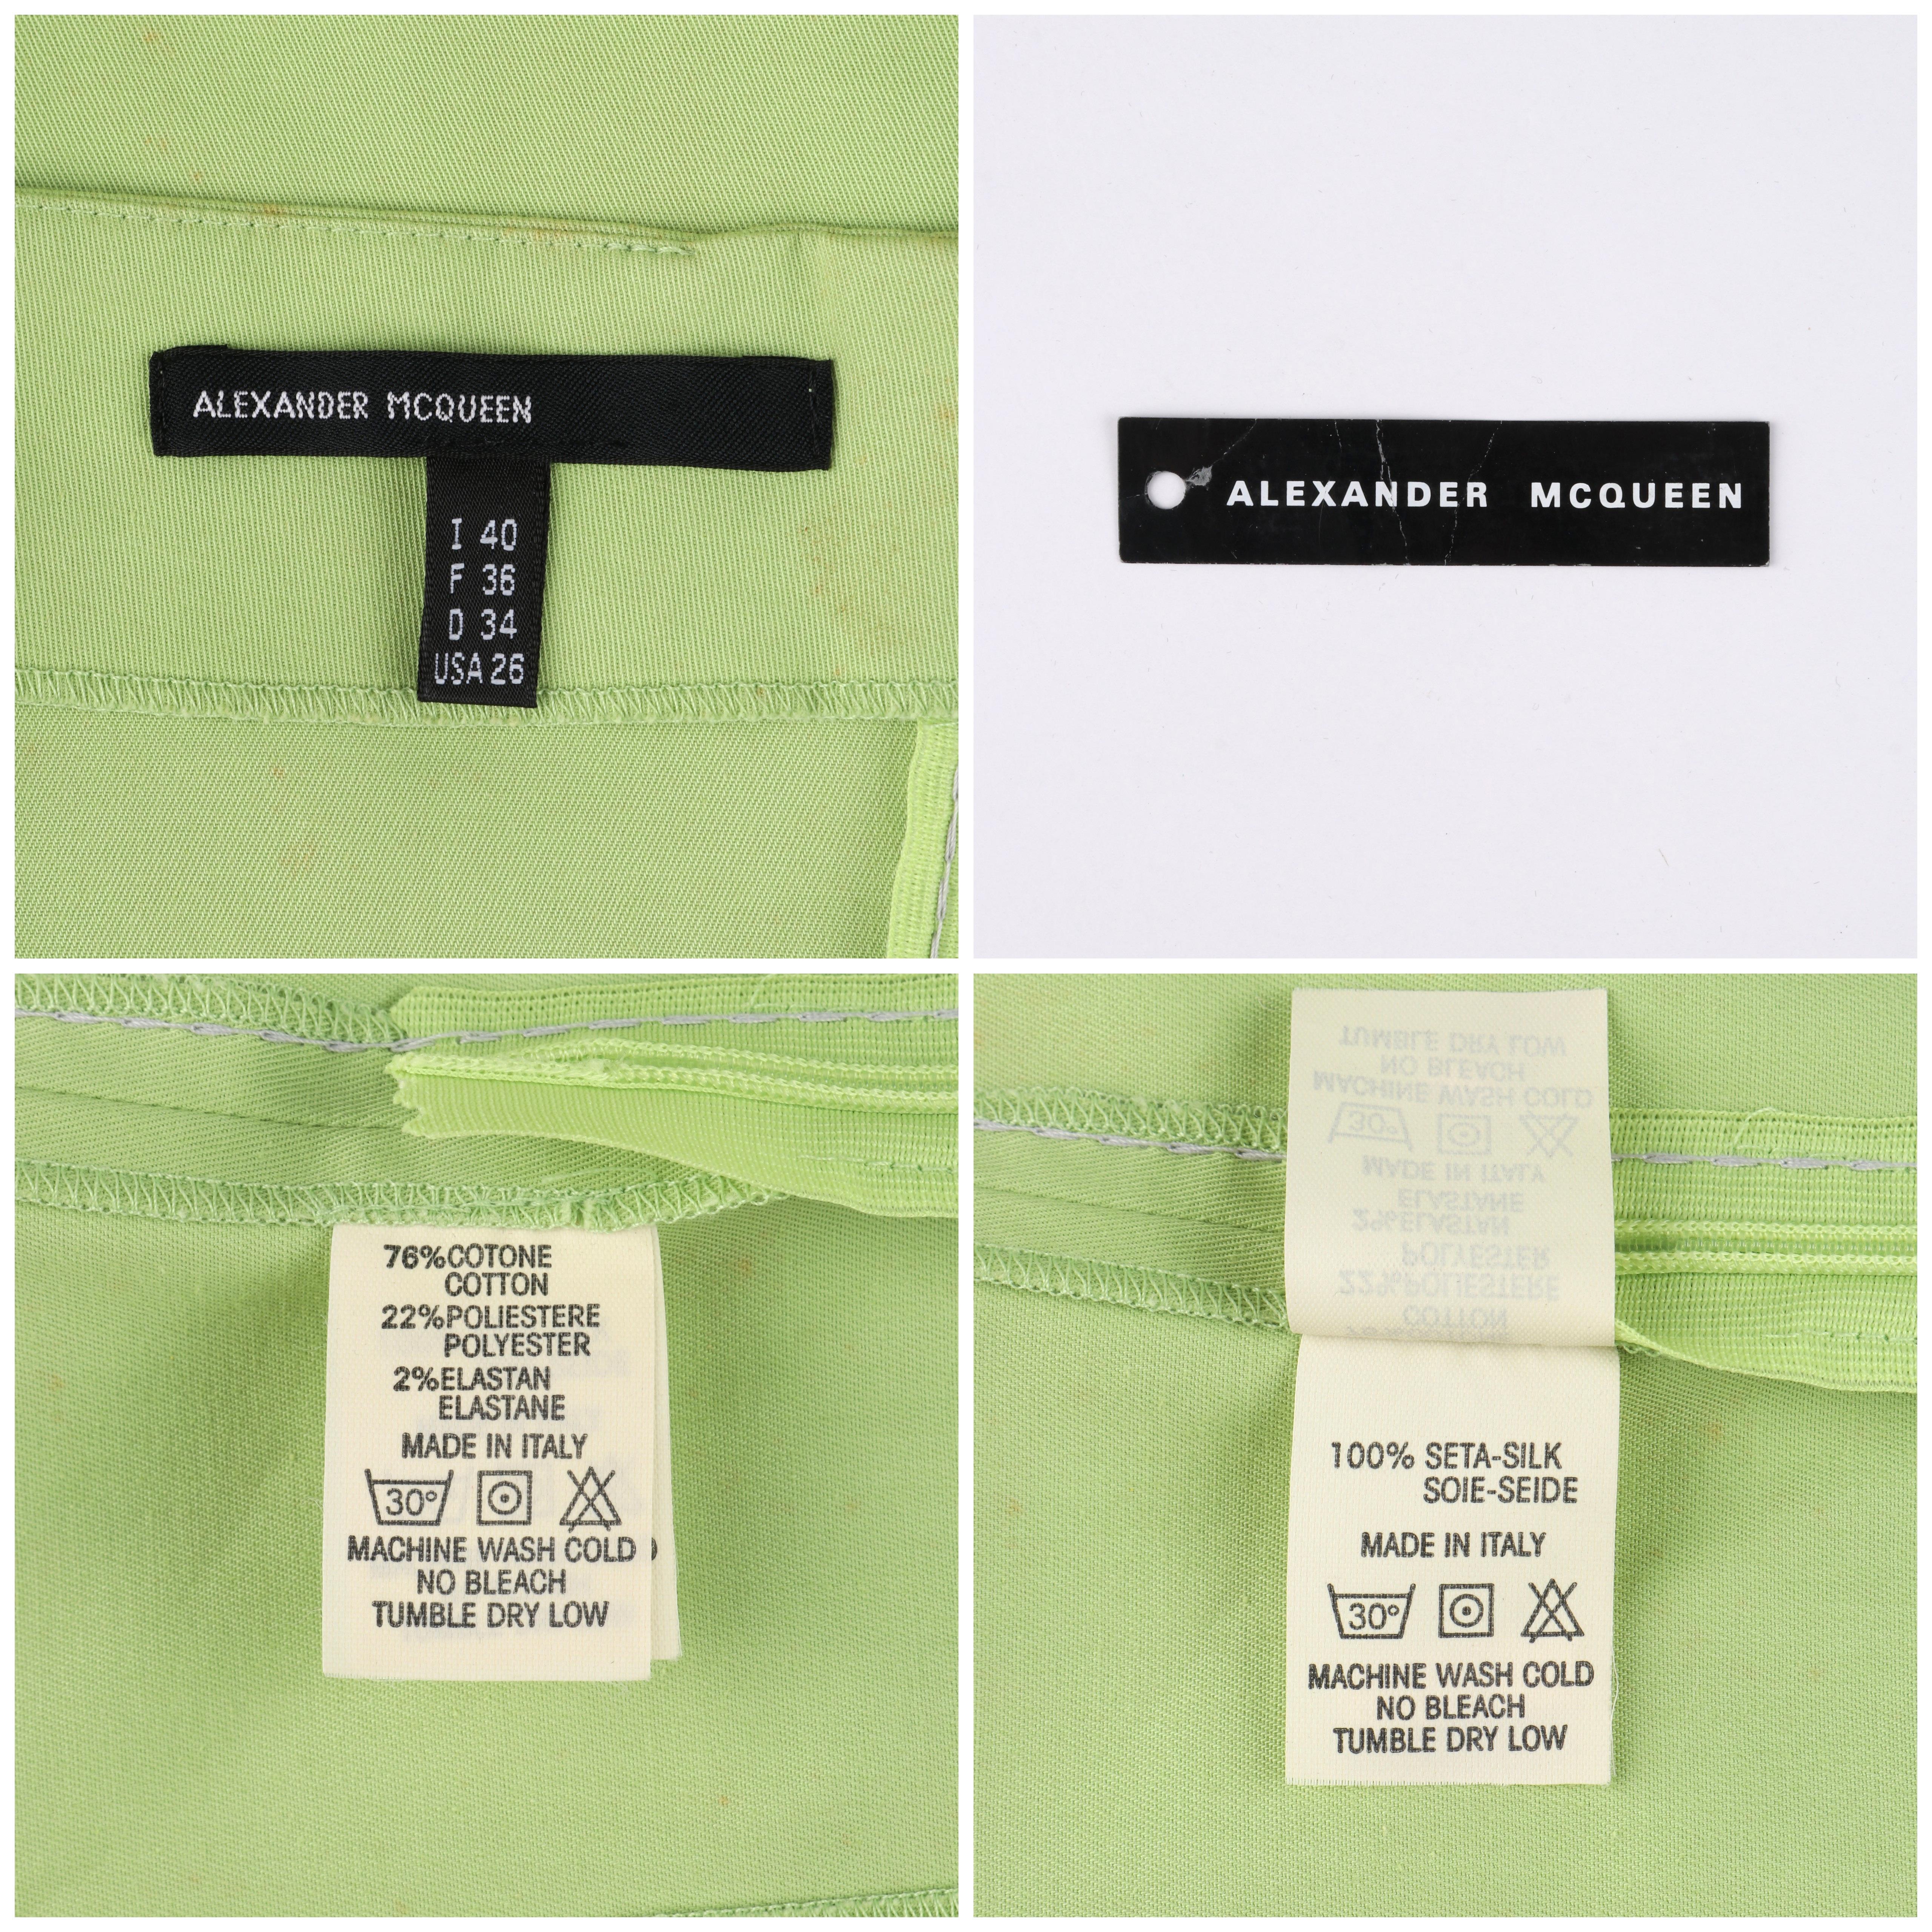 ALEXANDER McQUEEN S/S 1996 “The Hunger” Green Asymmetric Strapless Ruffle Dress For Sale 1